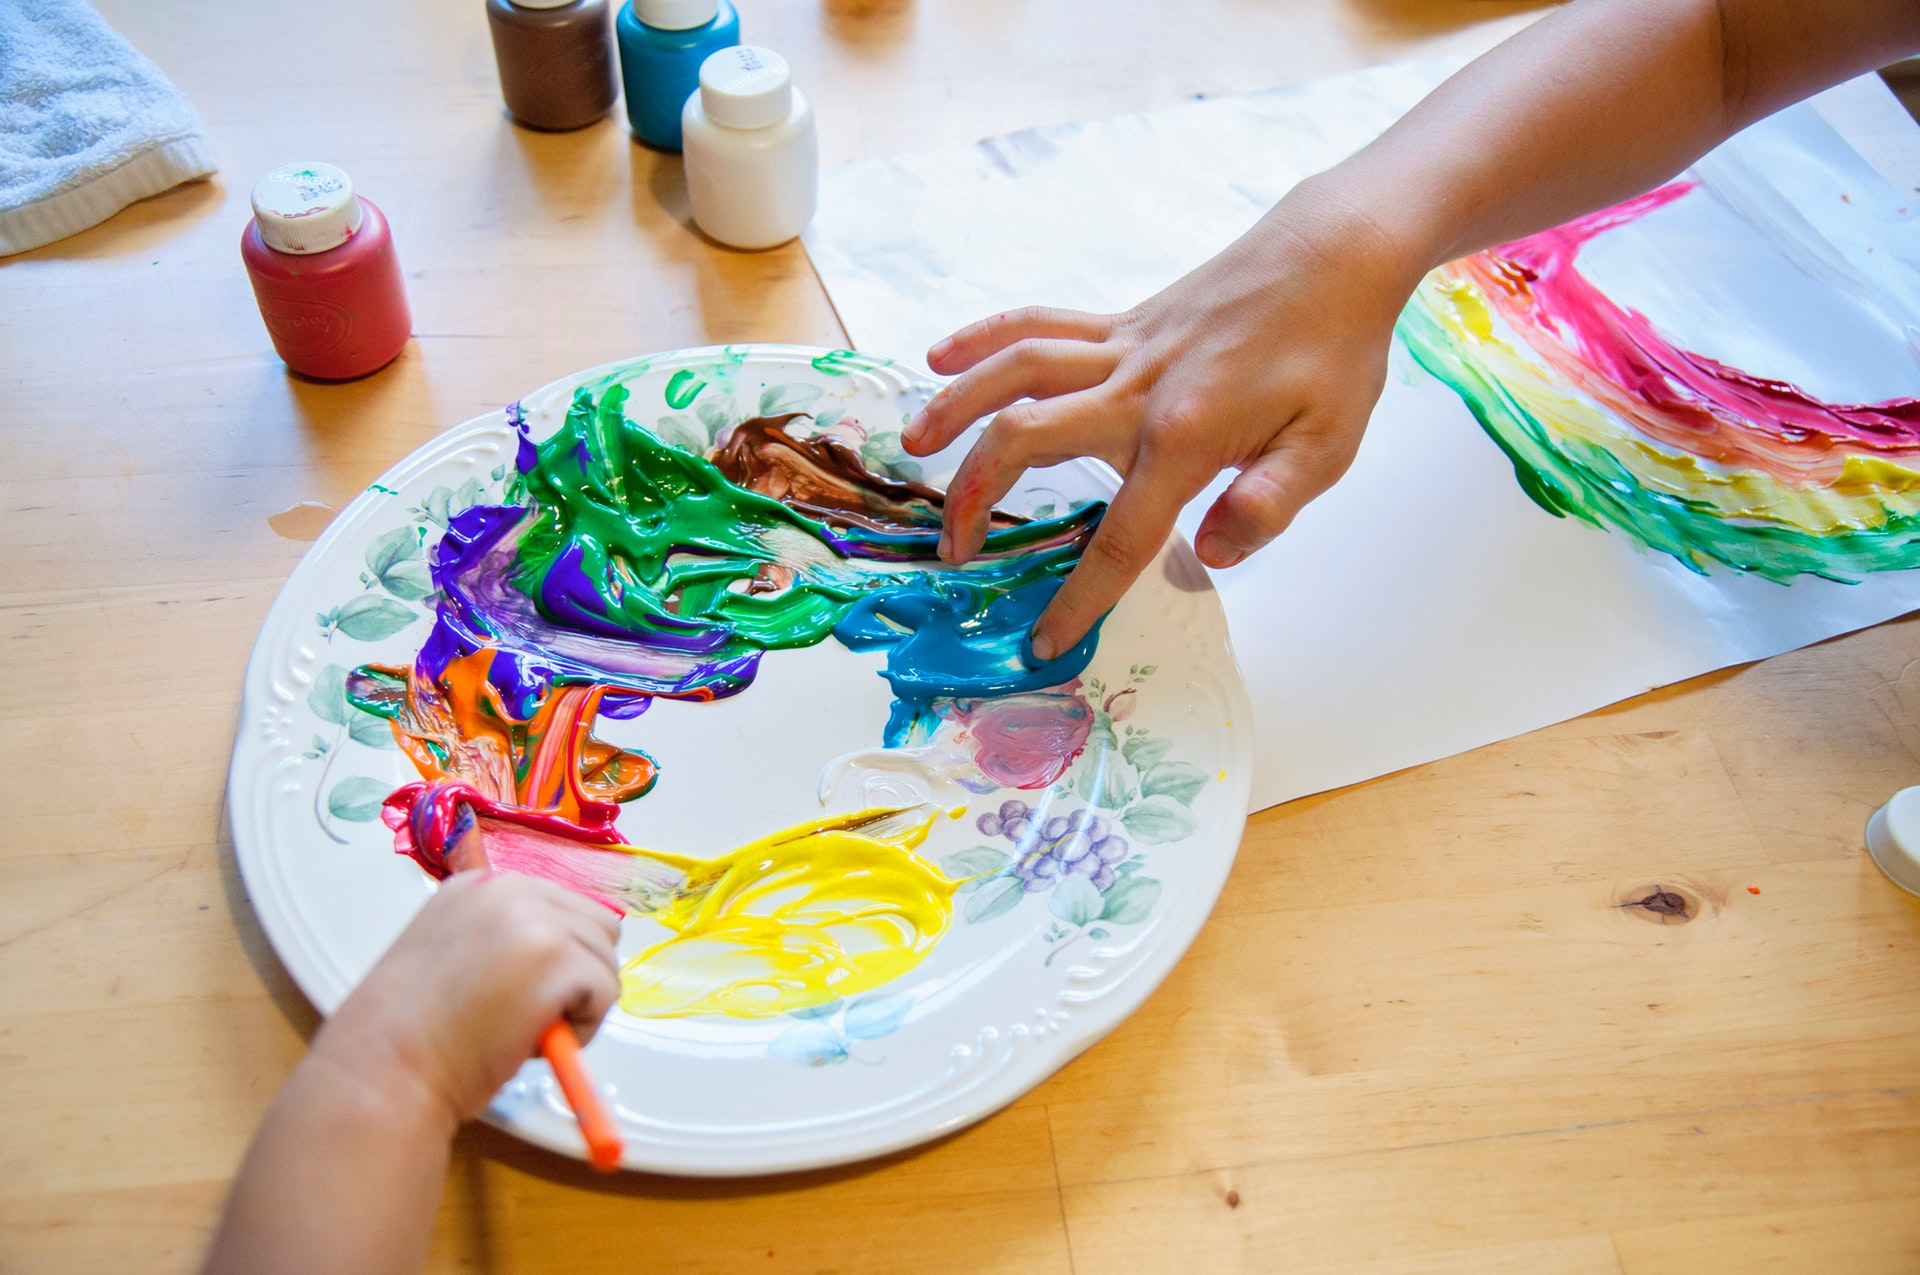 https://tinybeans.com/wp-content/uploads/2019/09/arts-and-crafts-children-color-palette-amsw-photography-via-pexels.jpg